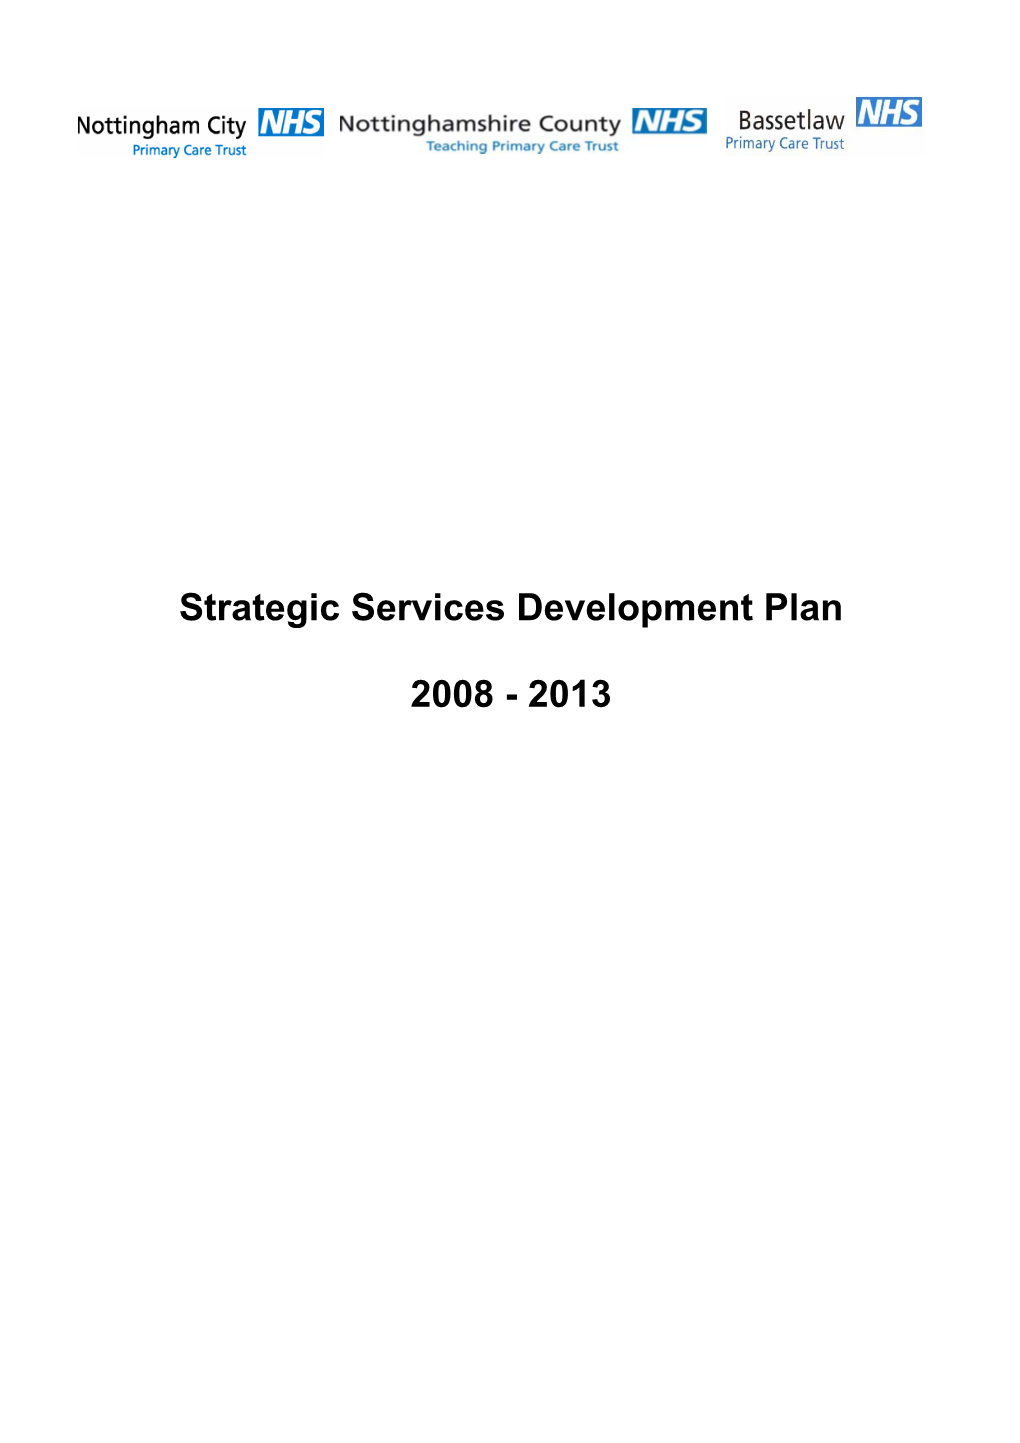 Strategic Services Development Plan 2008